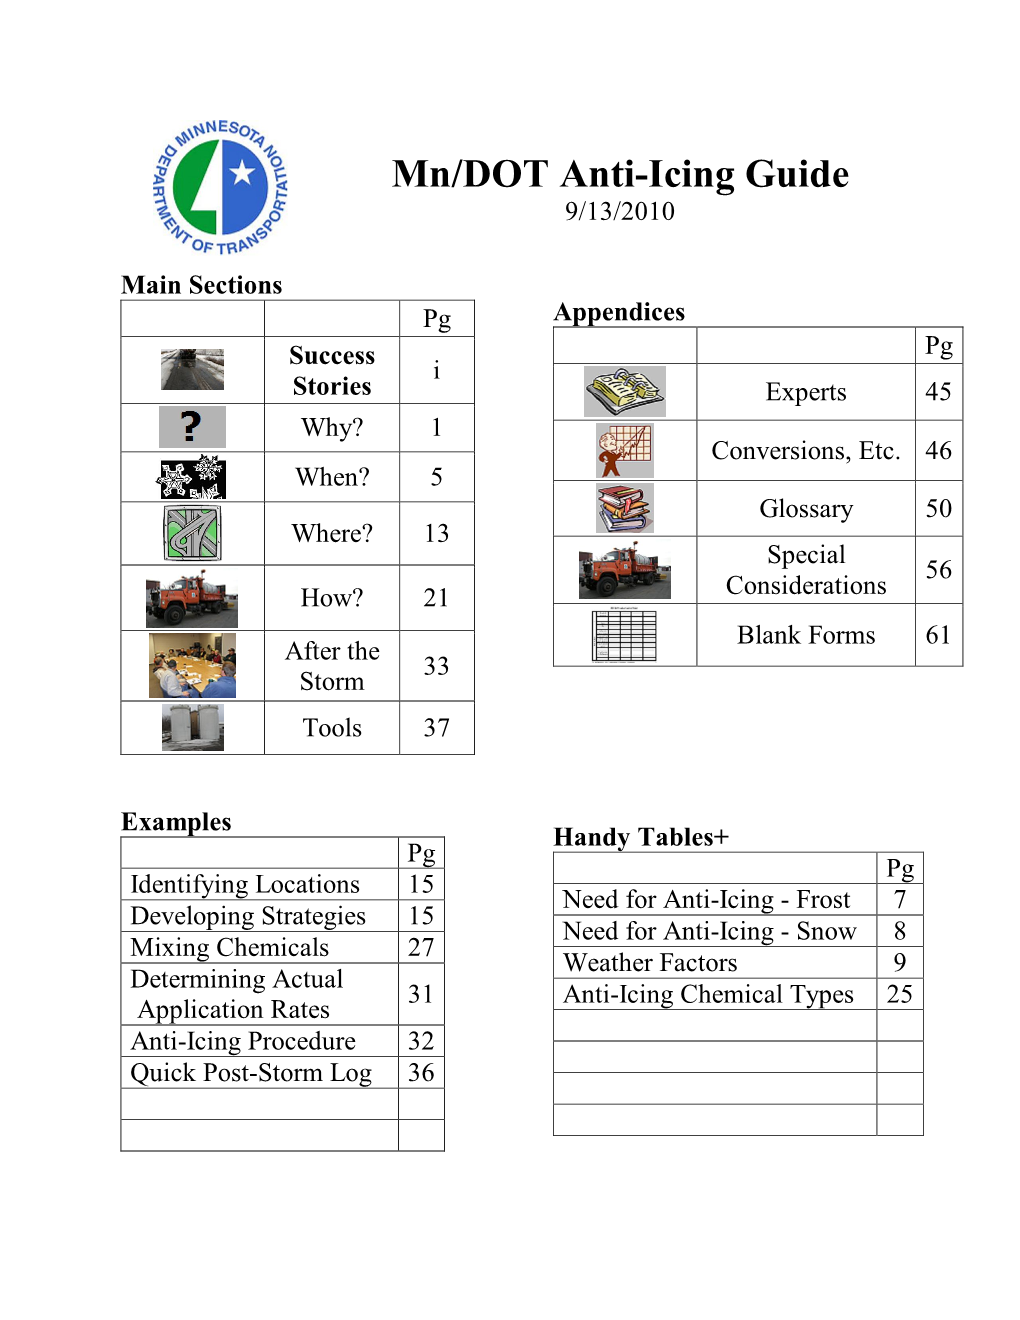 Mn/DOT Anti-Icing Guide 9/13/2010